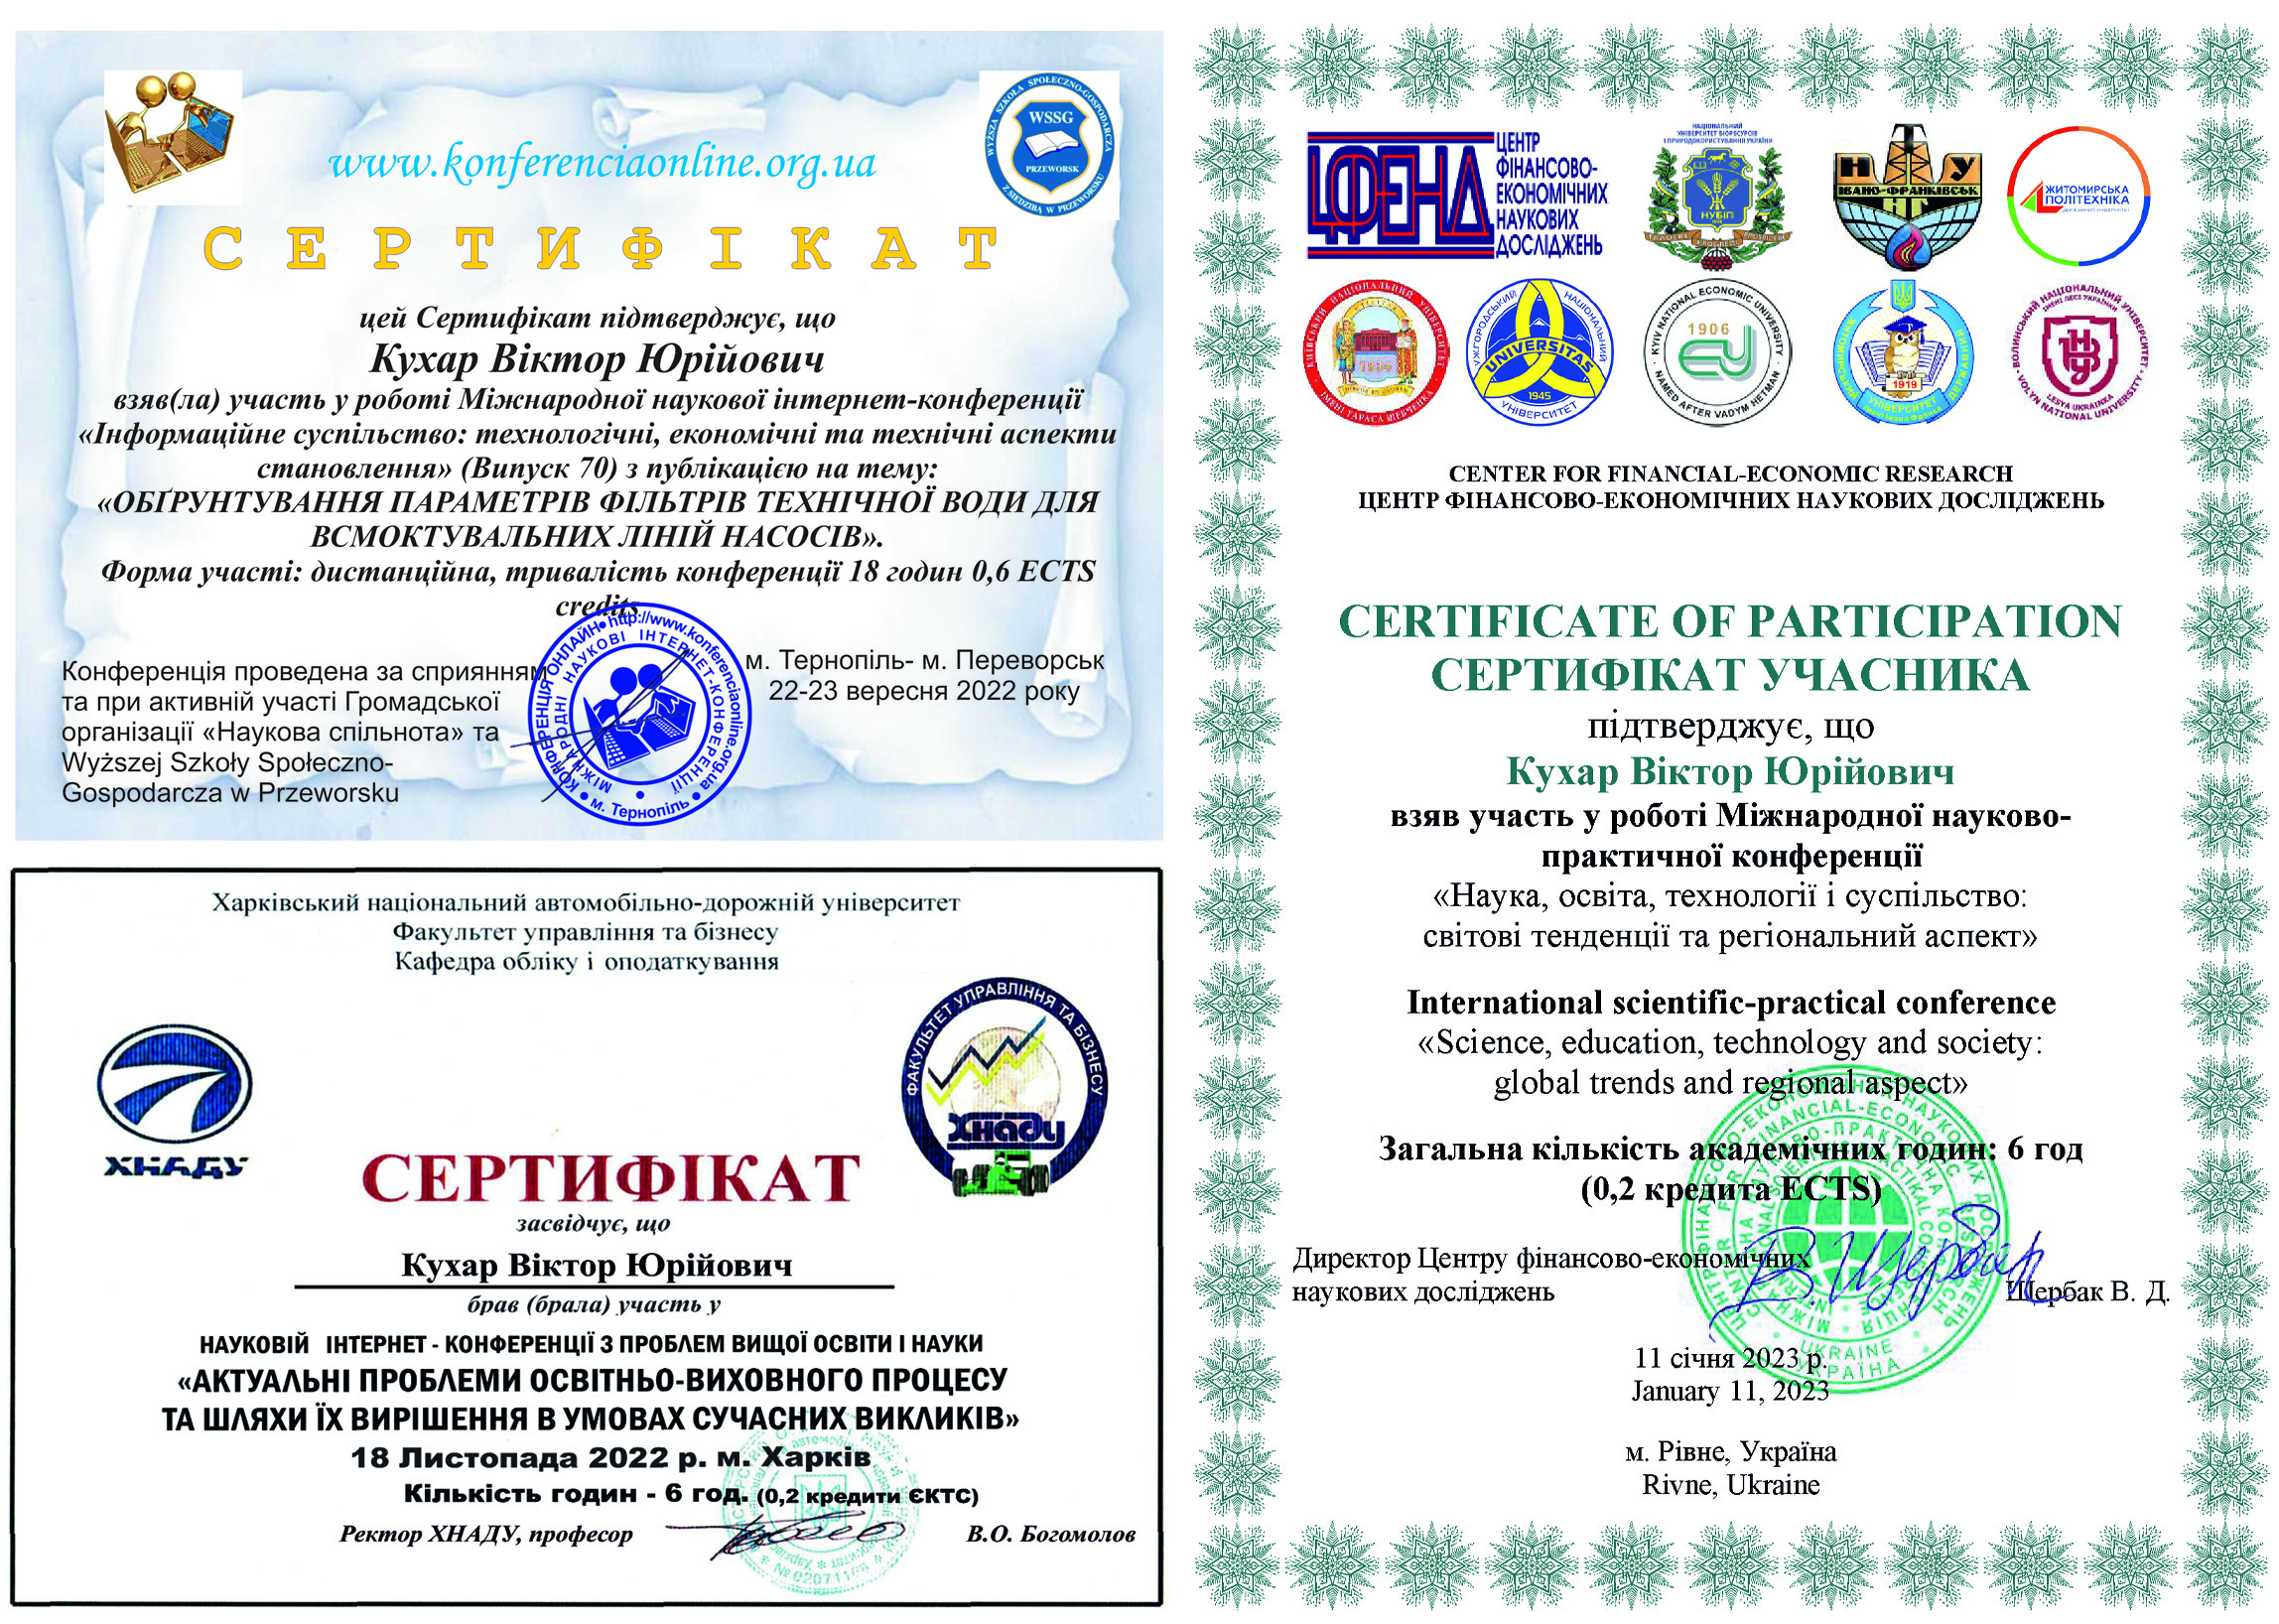 Certificates of participation in Ukrainian conferences